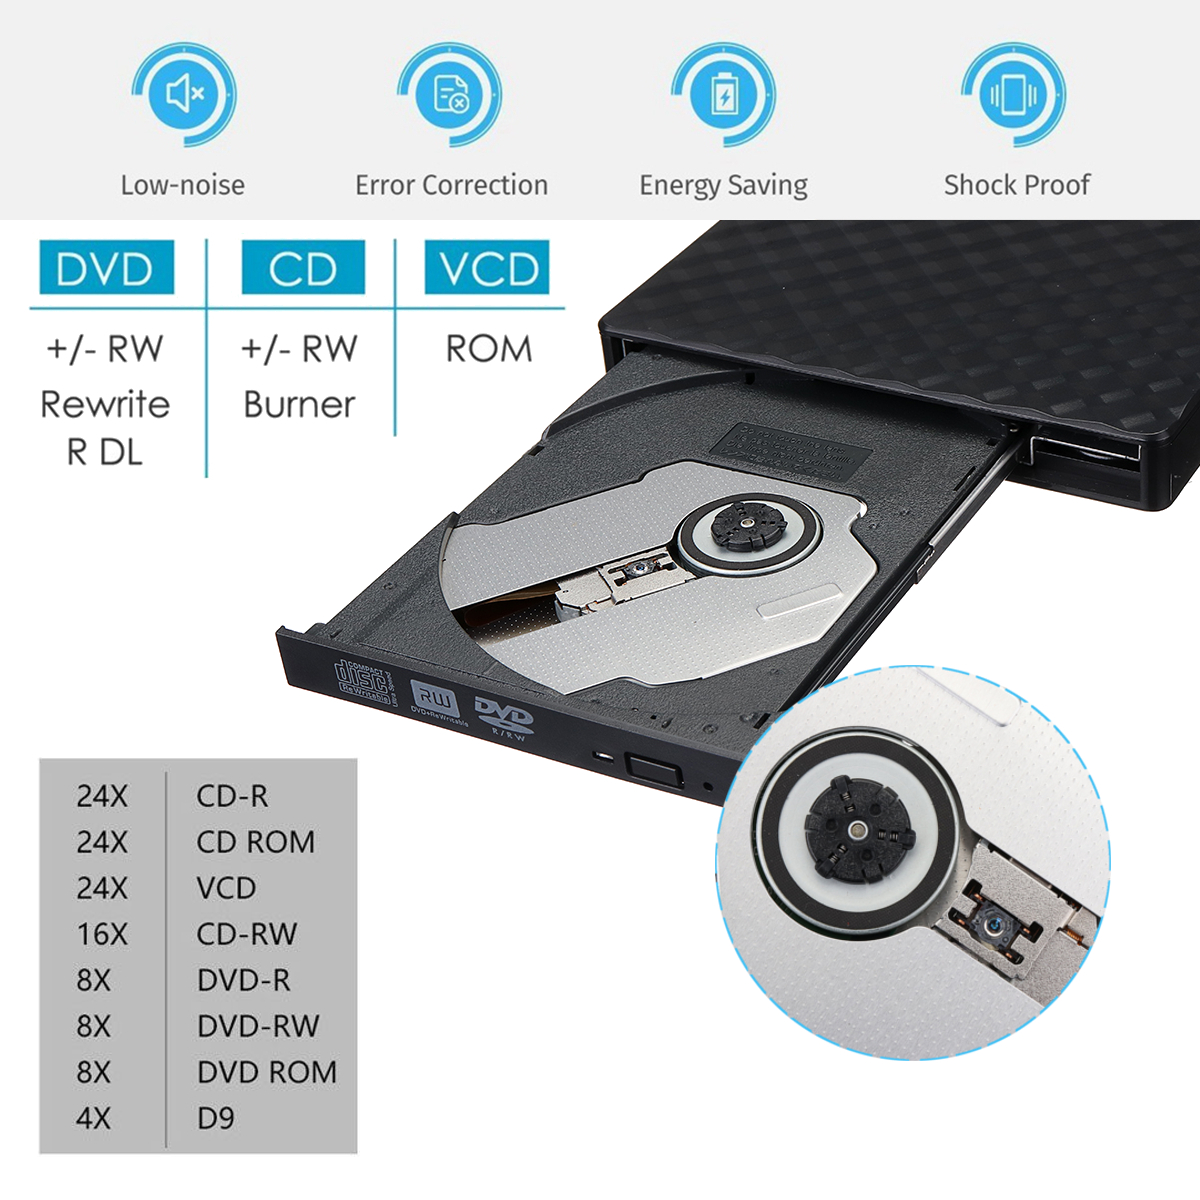 External-USB30-DVD-RW-CD-Writer-Slim-Optical-Drive-Burner-Reader-Player-For-PC-Laptop-1633940-3